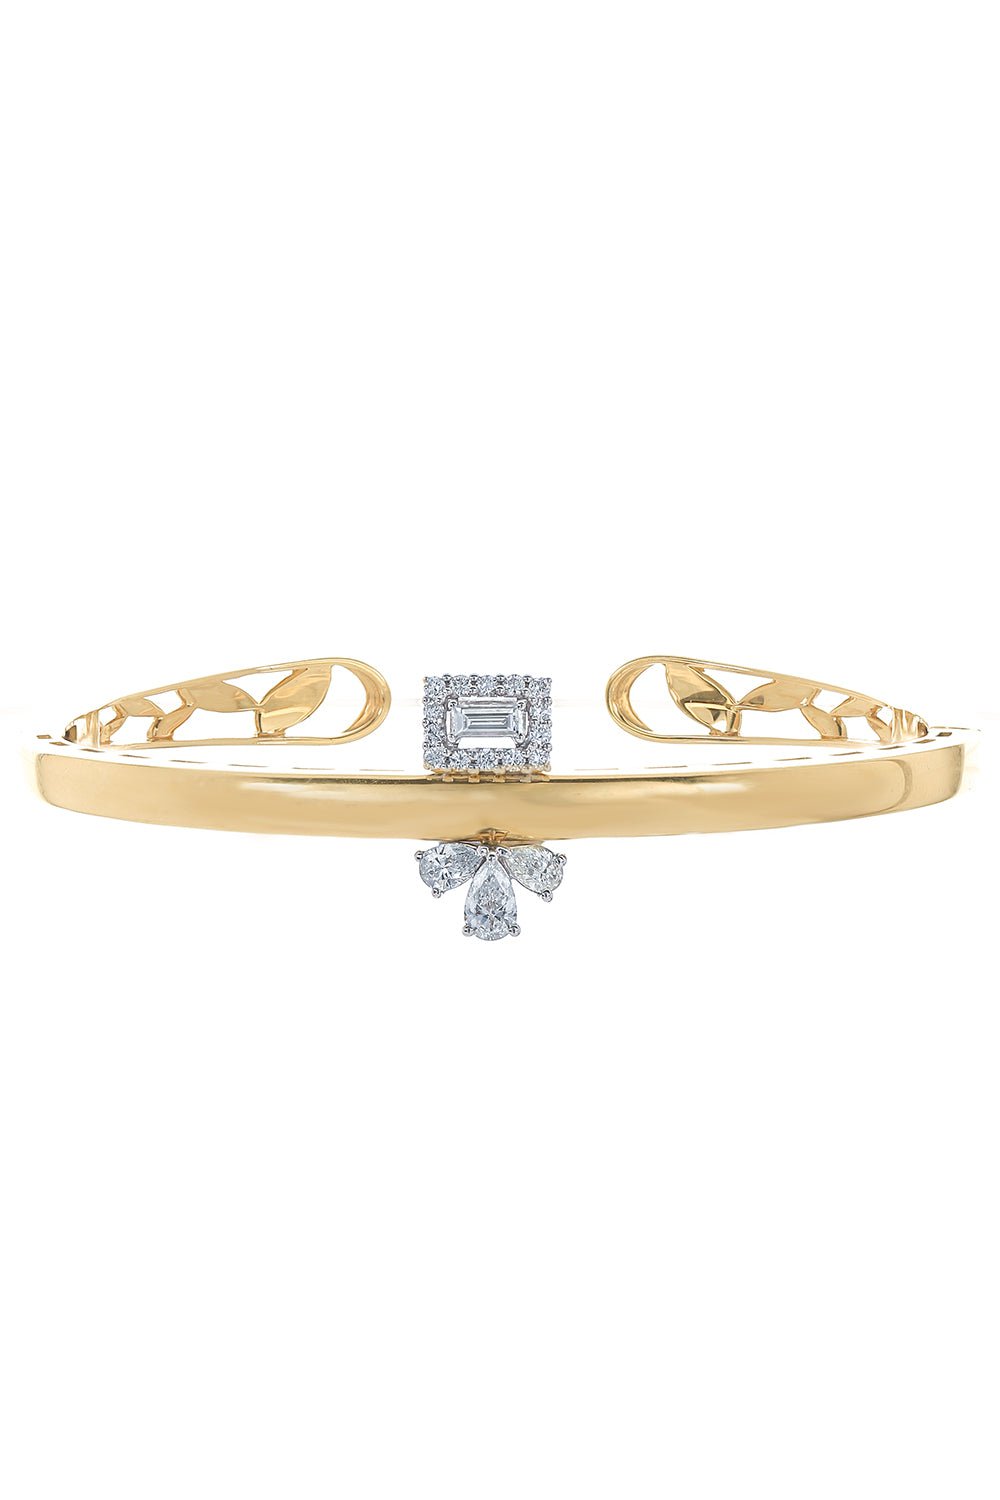 YEPREM JEWELLERY-Golden Strada Diamond Bangle Bracelet-YELLOW GOLD